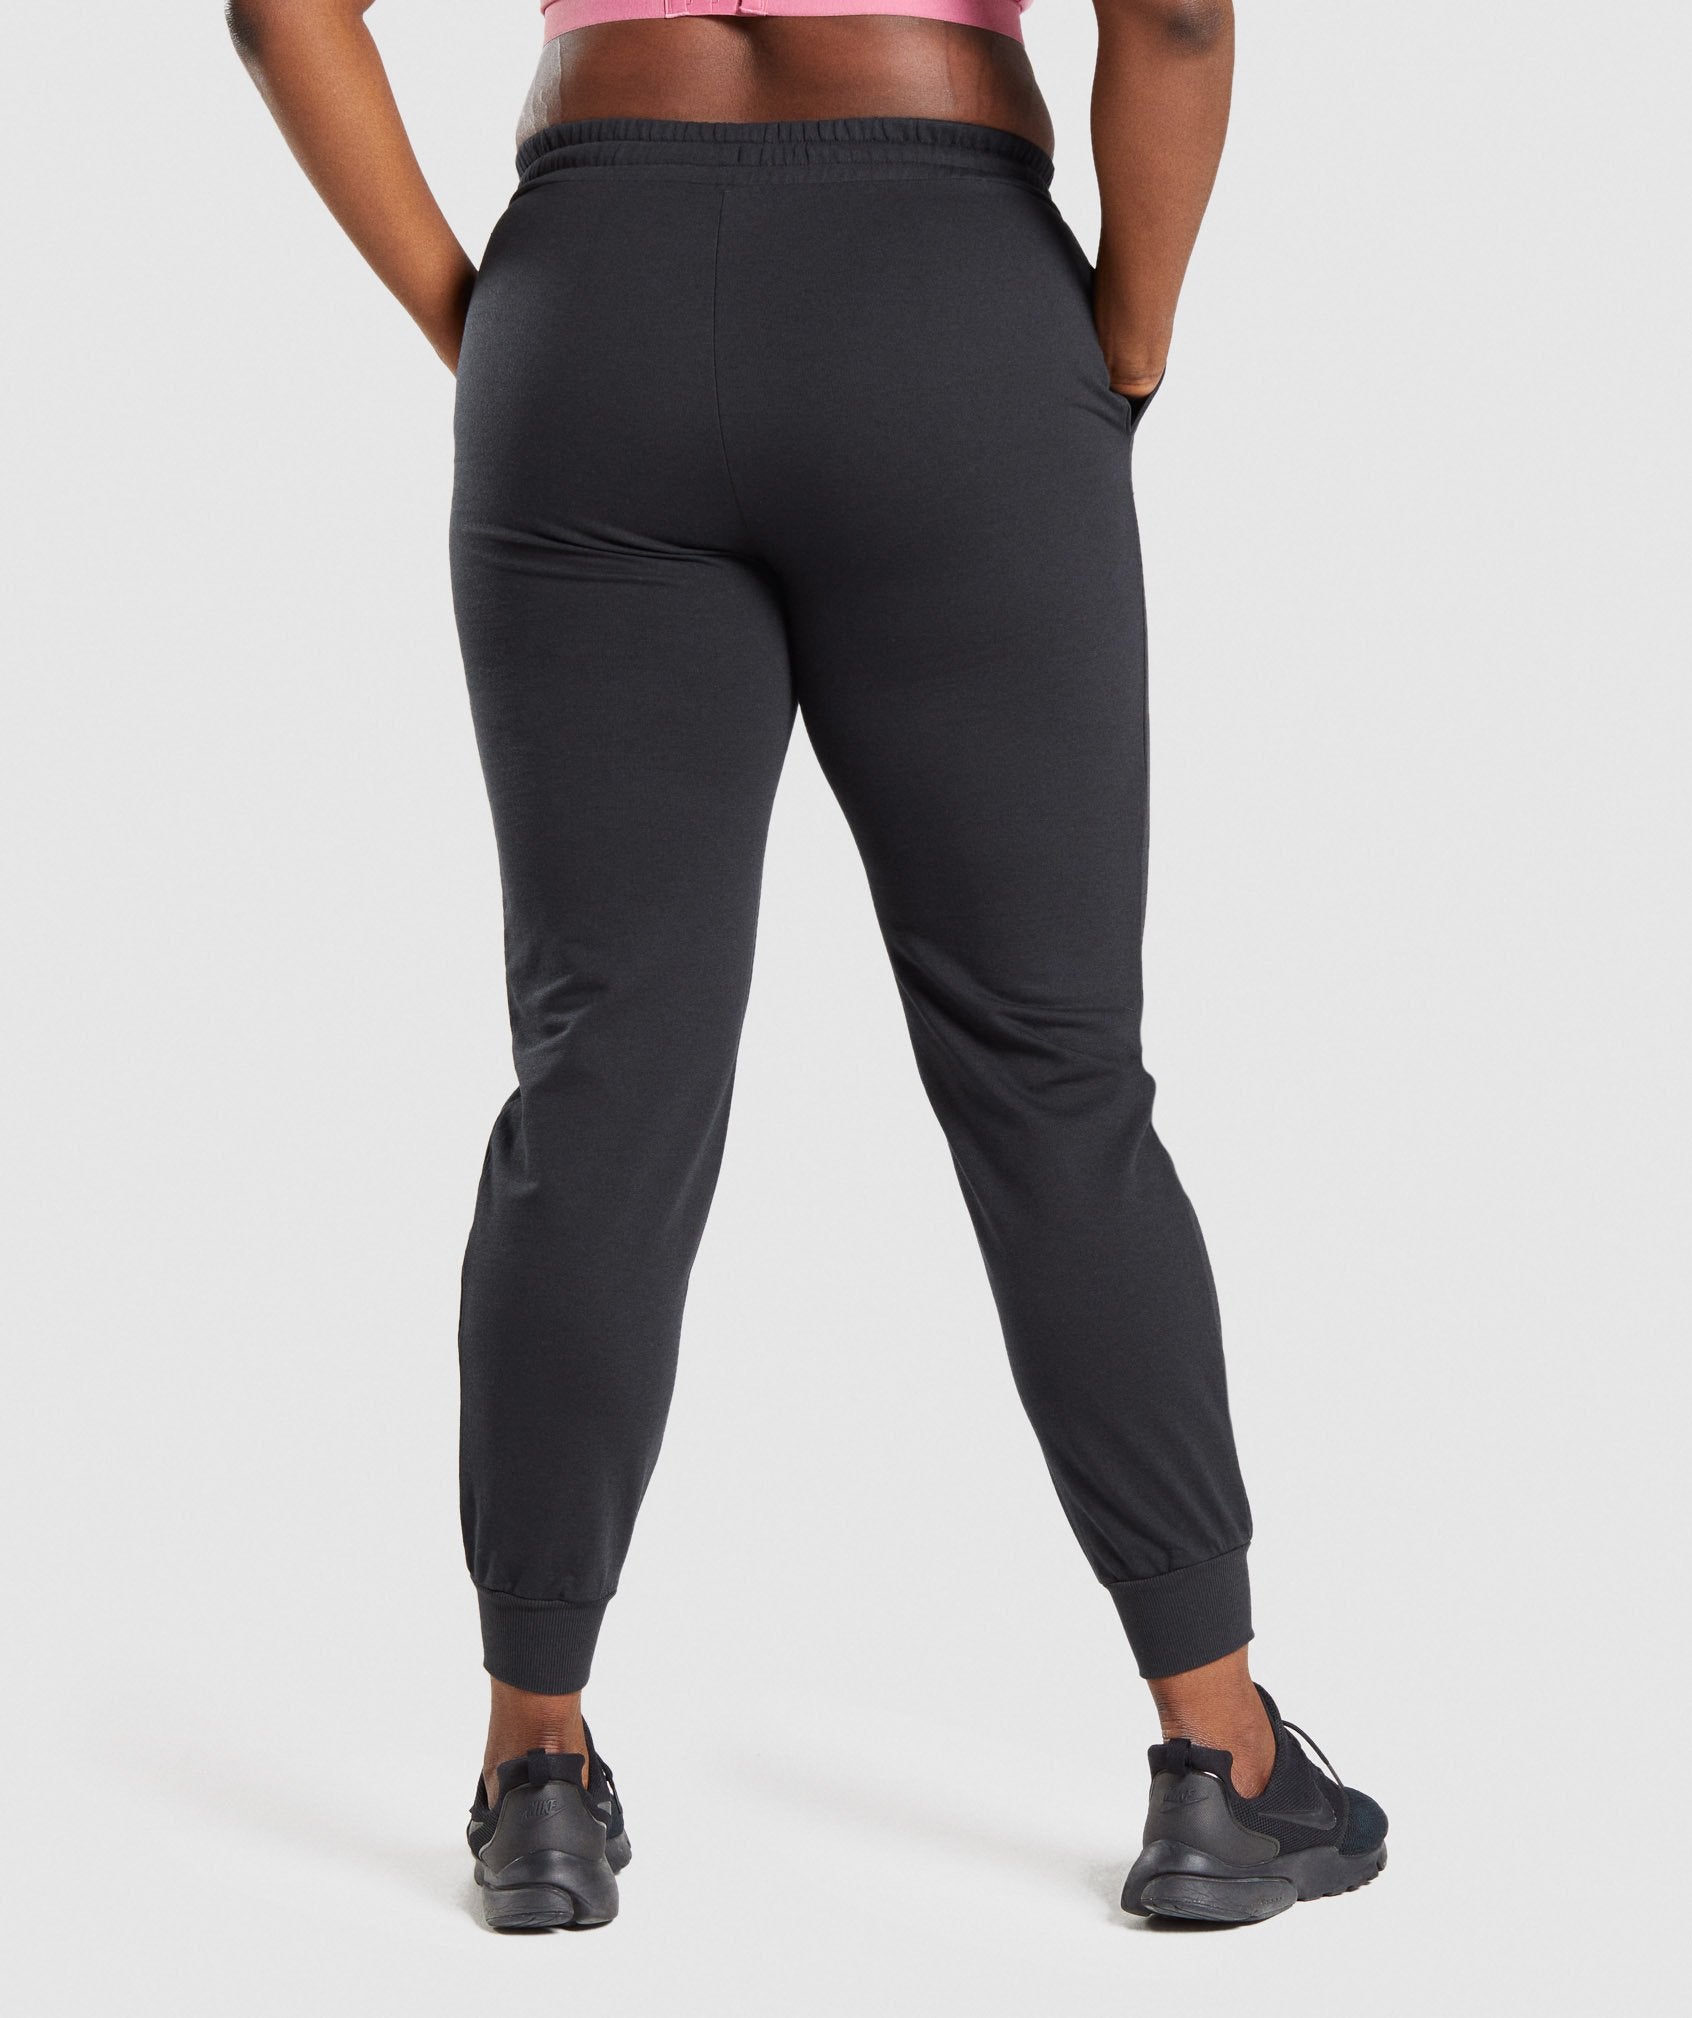 Gymshark‎ Women's Joggers - Black - Medium Woven With Pockets